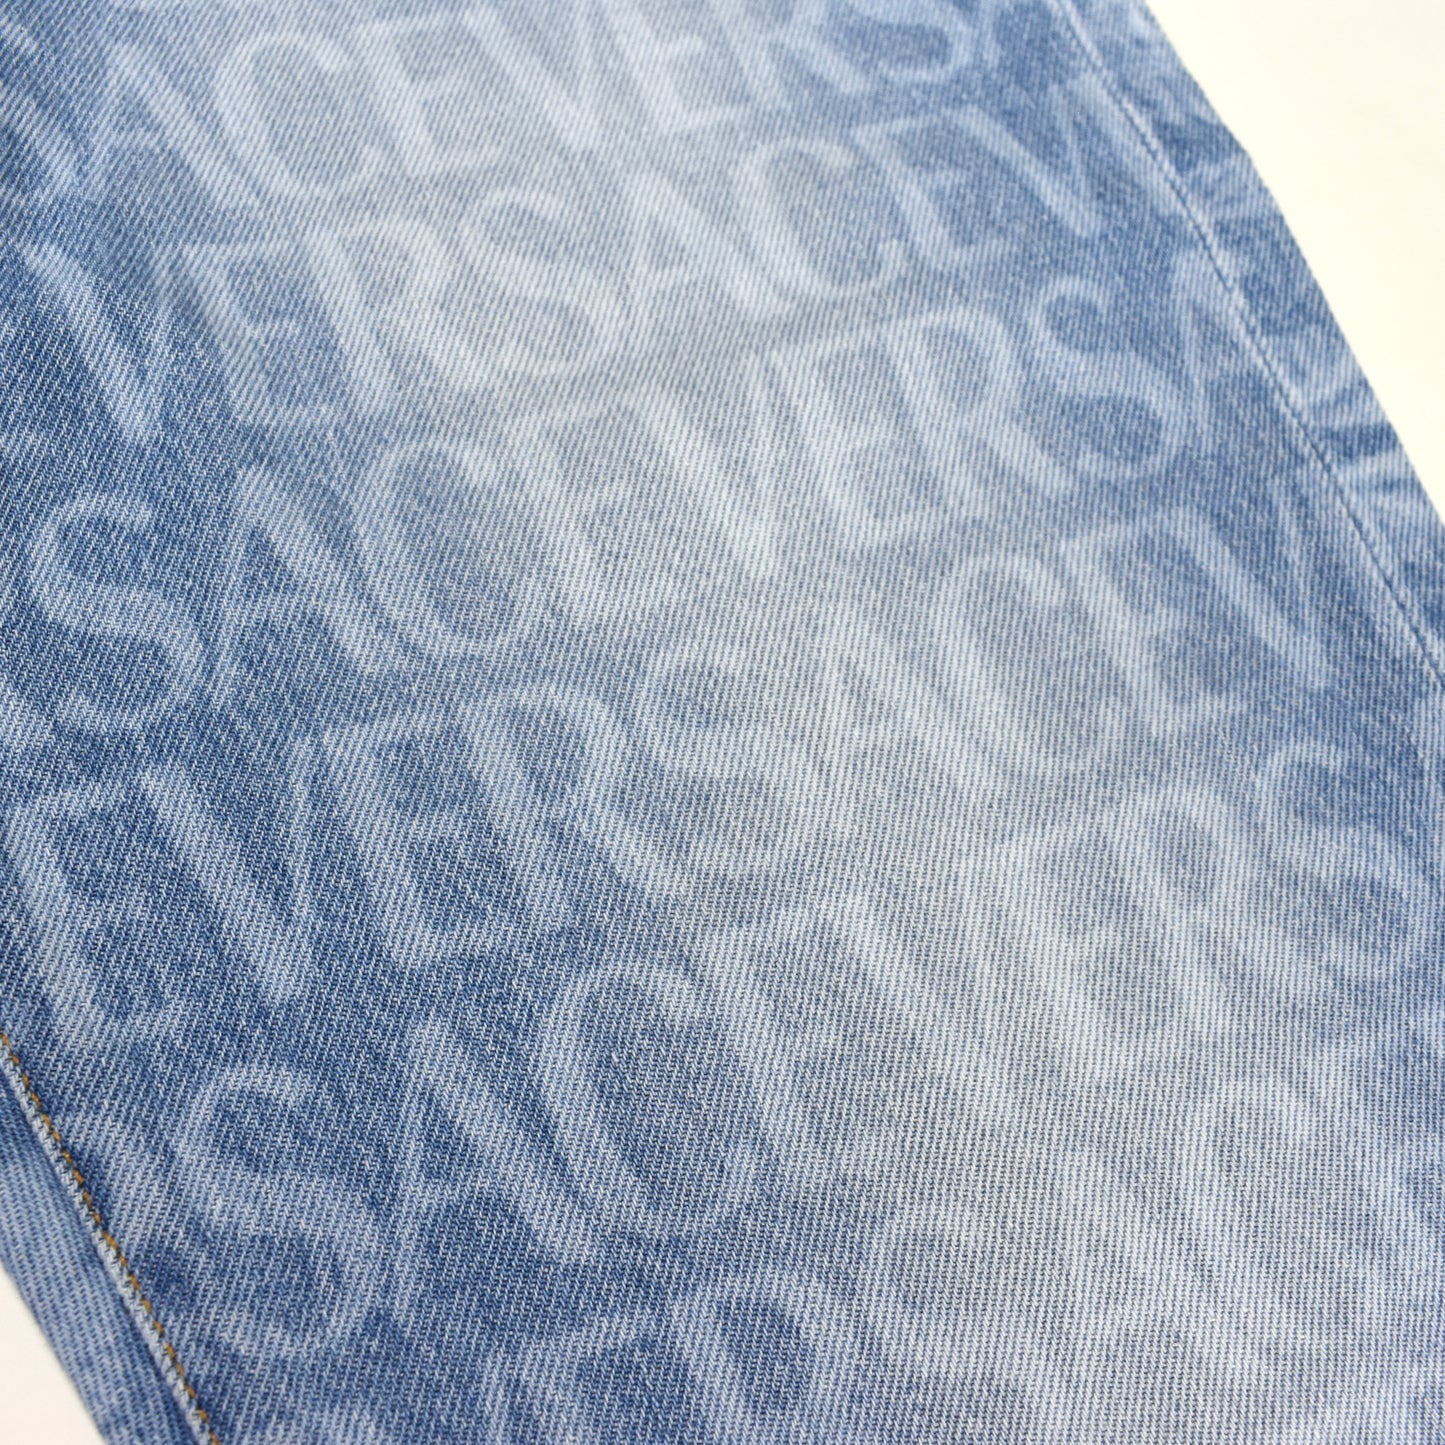 Versace - Allover Logo Print Light Wash Denim Jeans